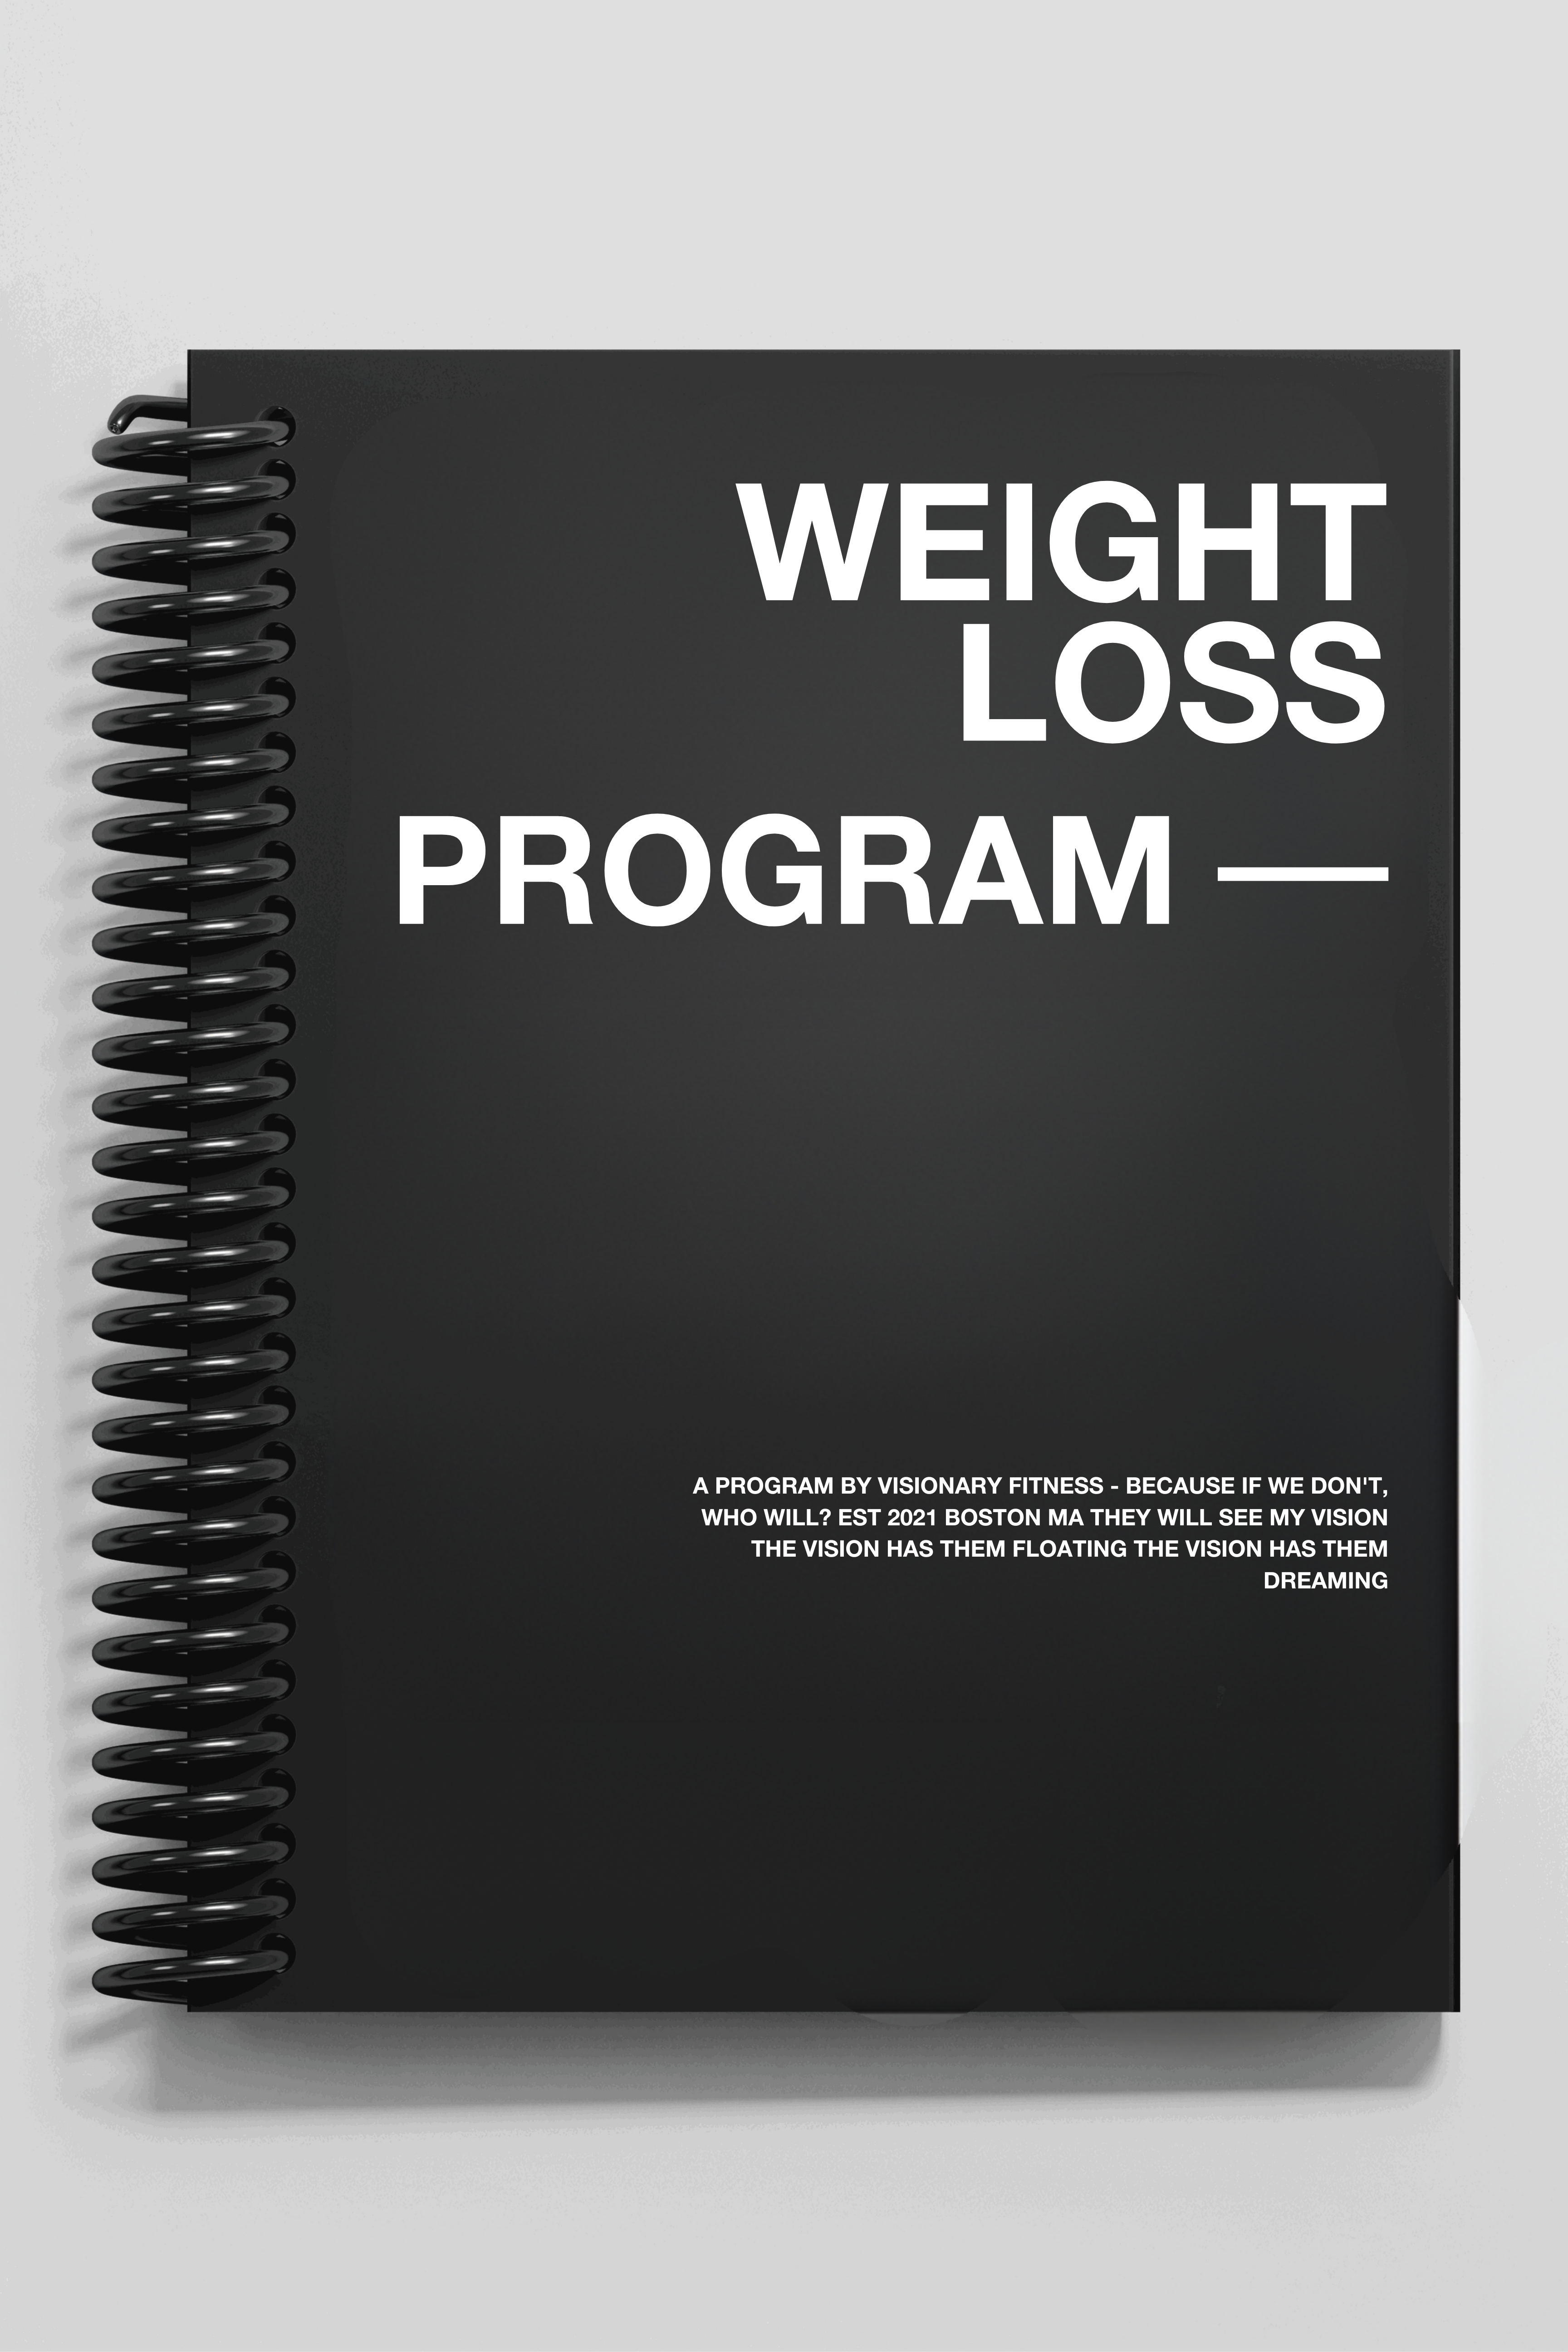 FREE WEIGHT LOSS PROGRAM